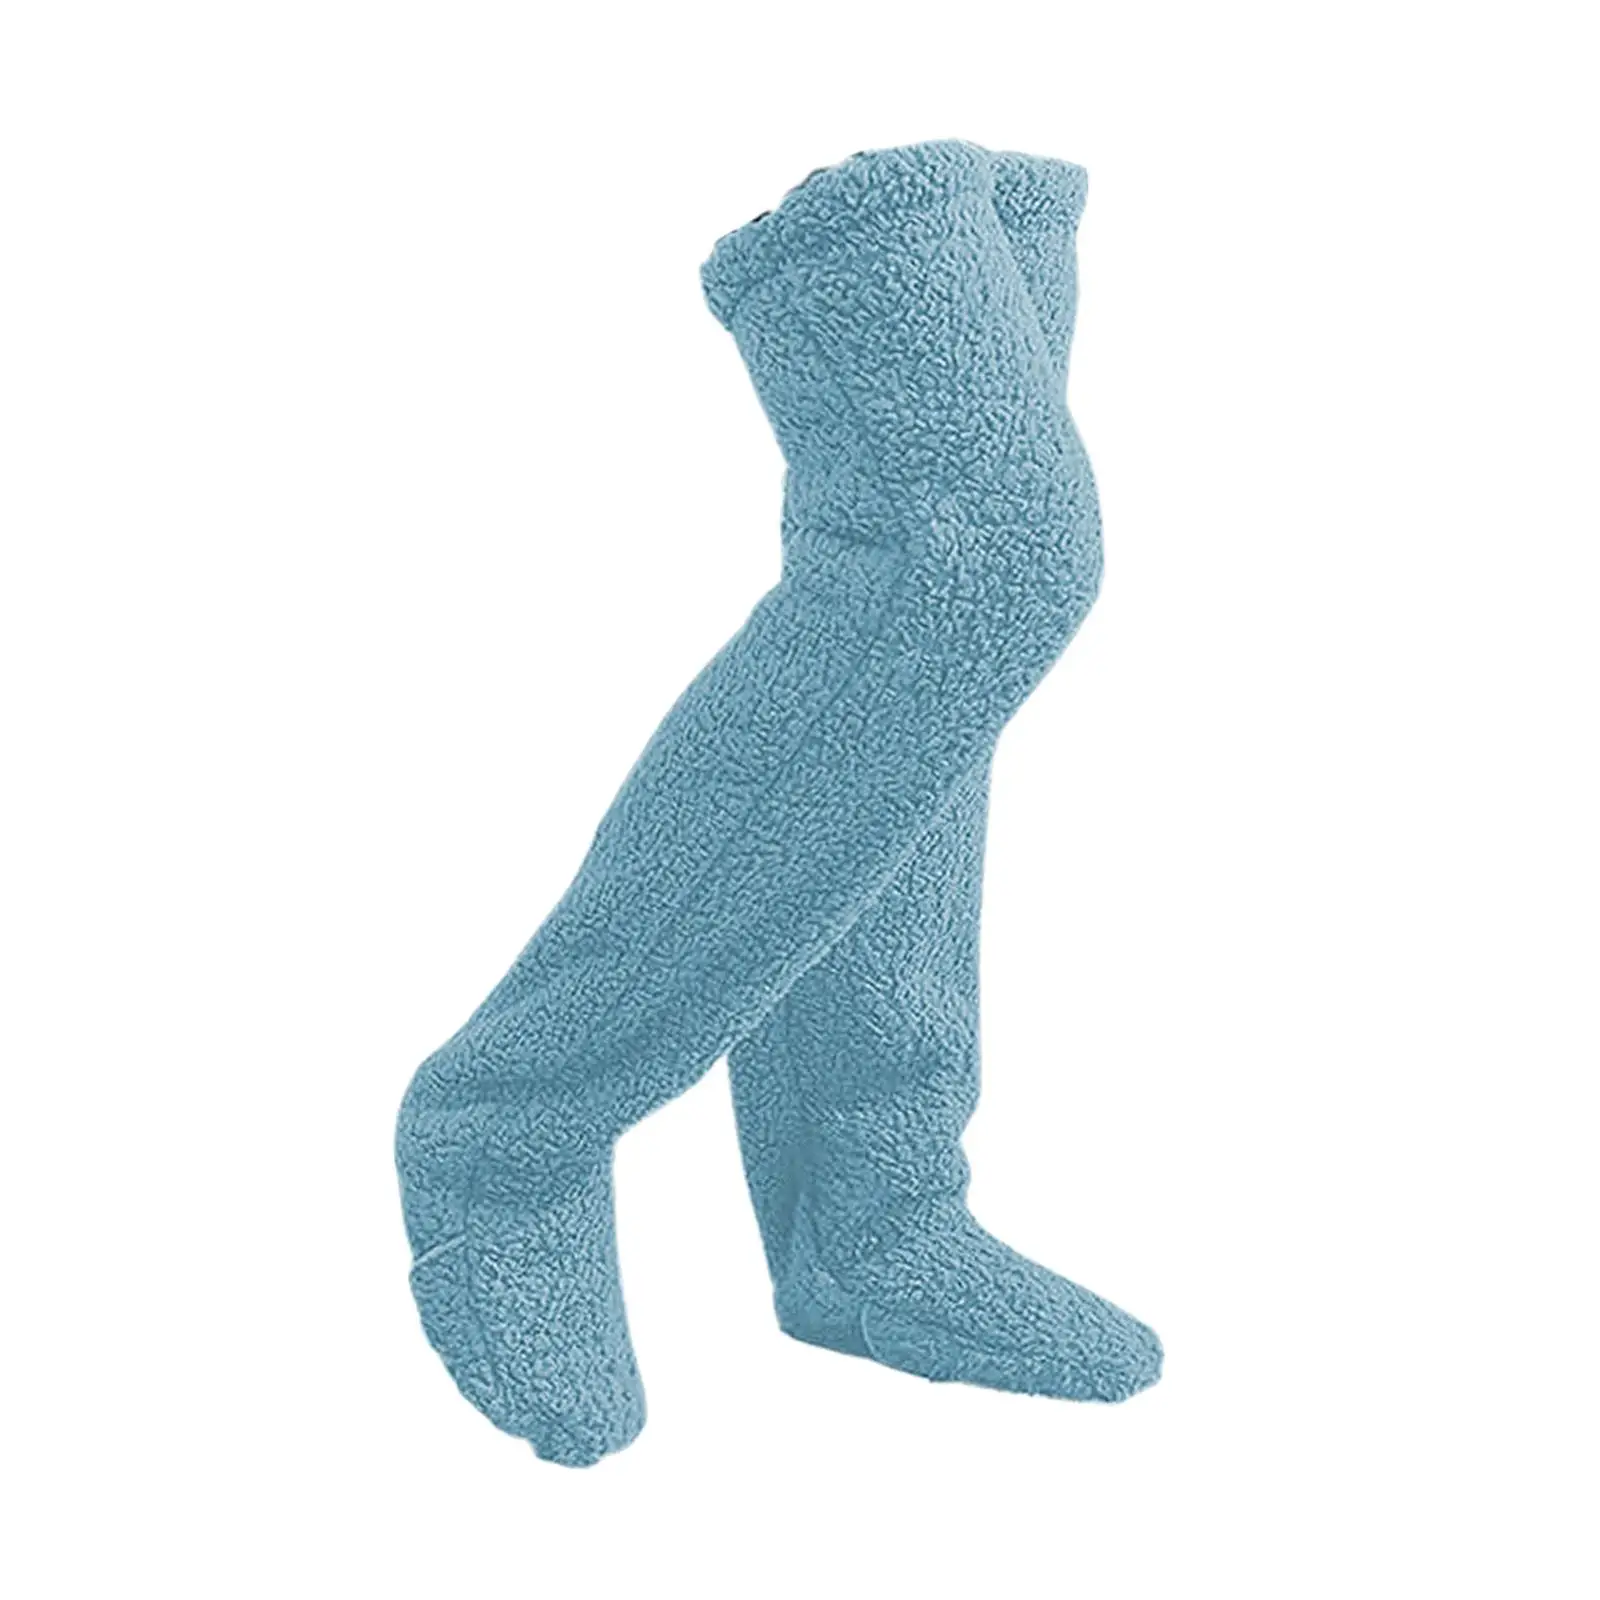 Thigh High Socks Cosplay Accessories Leg Stocking Plush Leg Warmers Over Knee High Fuzzy Socks for Living Room Apartment Dorm